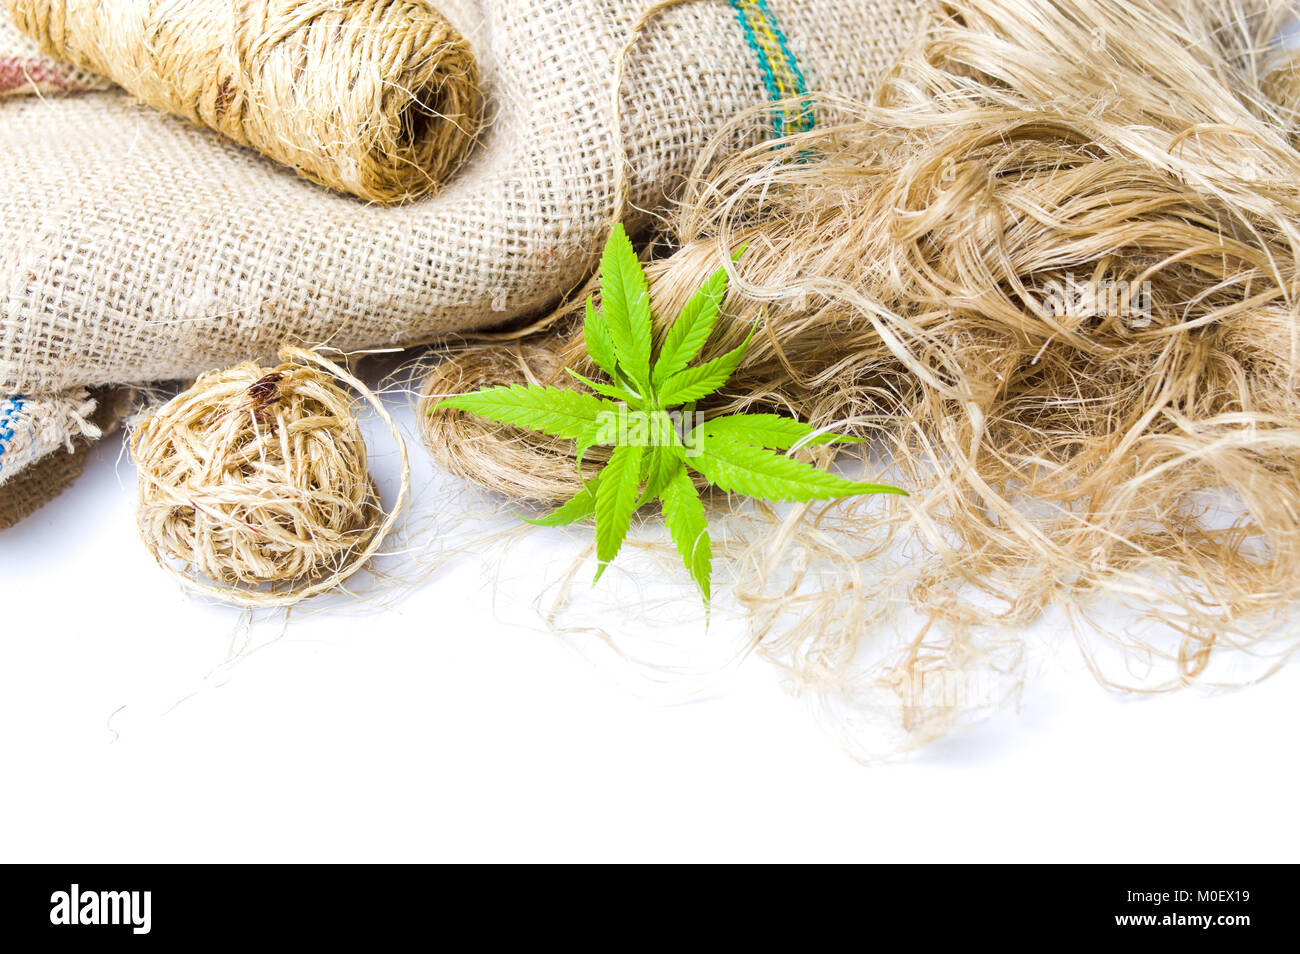 Feuilles de marijuana et de cannabis, les fibres de chanvre isolated Banque D'Images